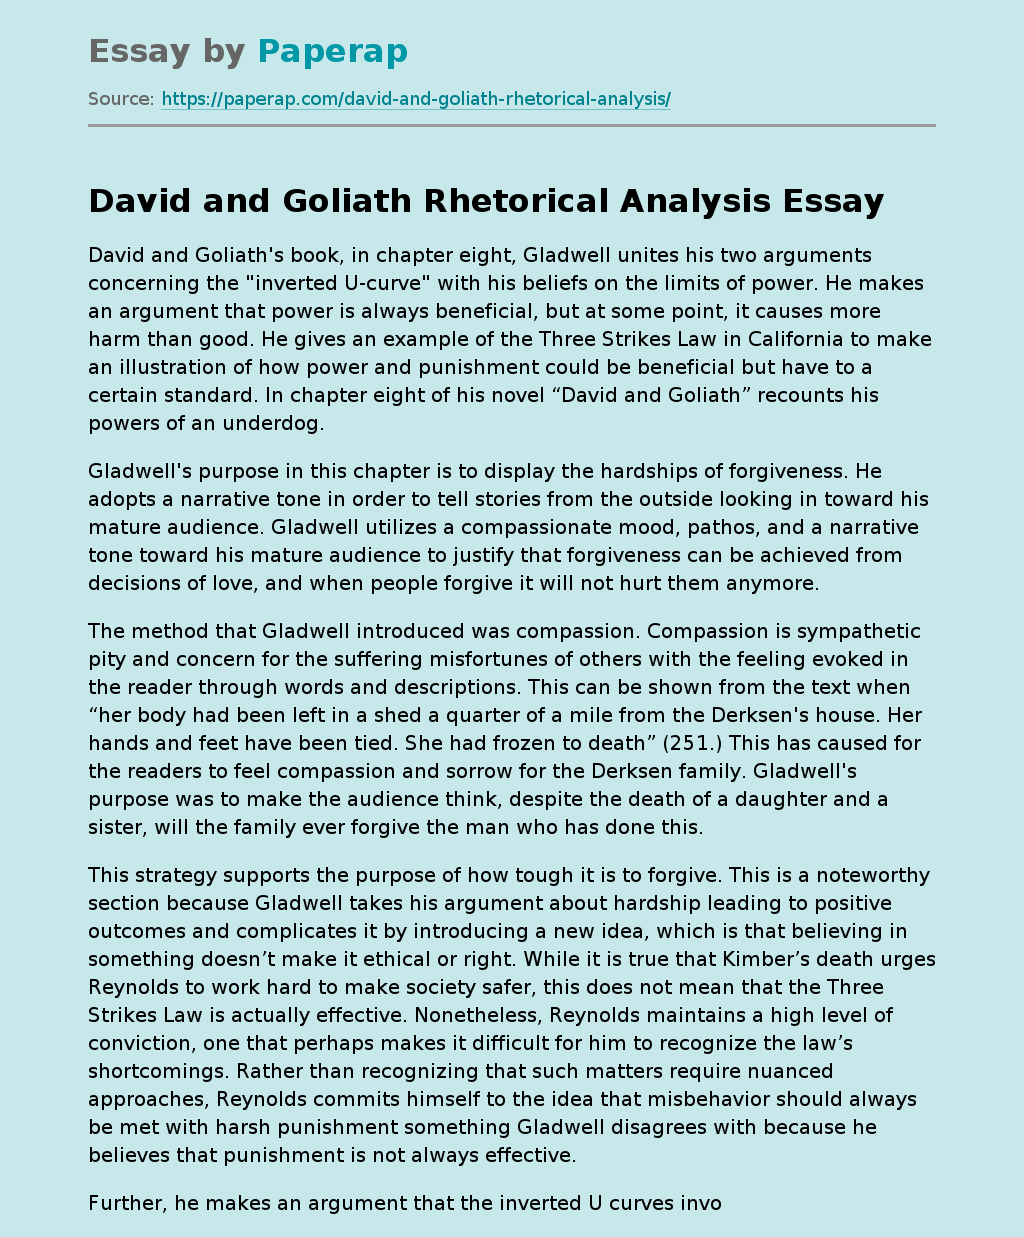 David and Goliath Rhetorical Analysis